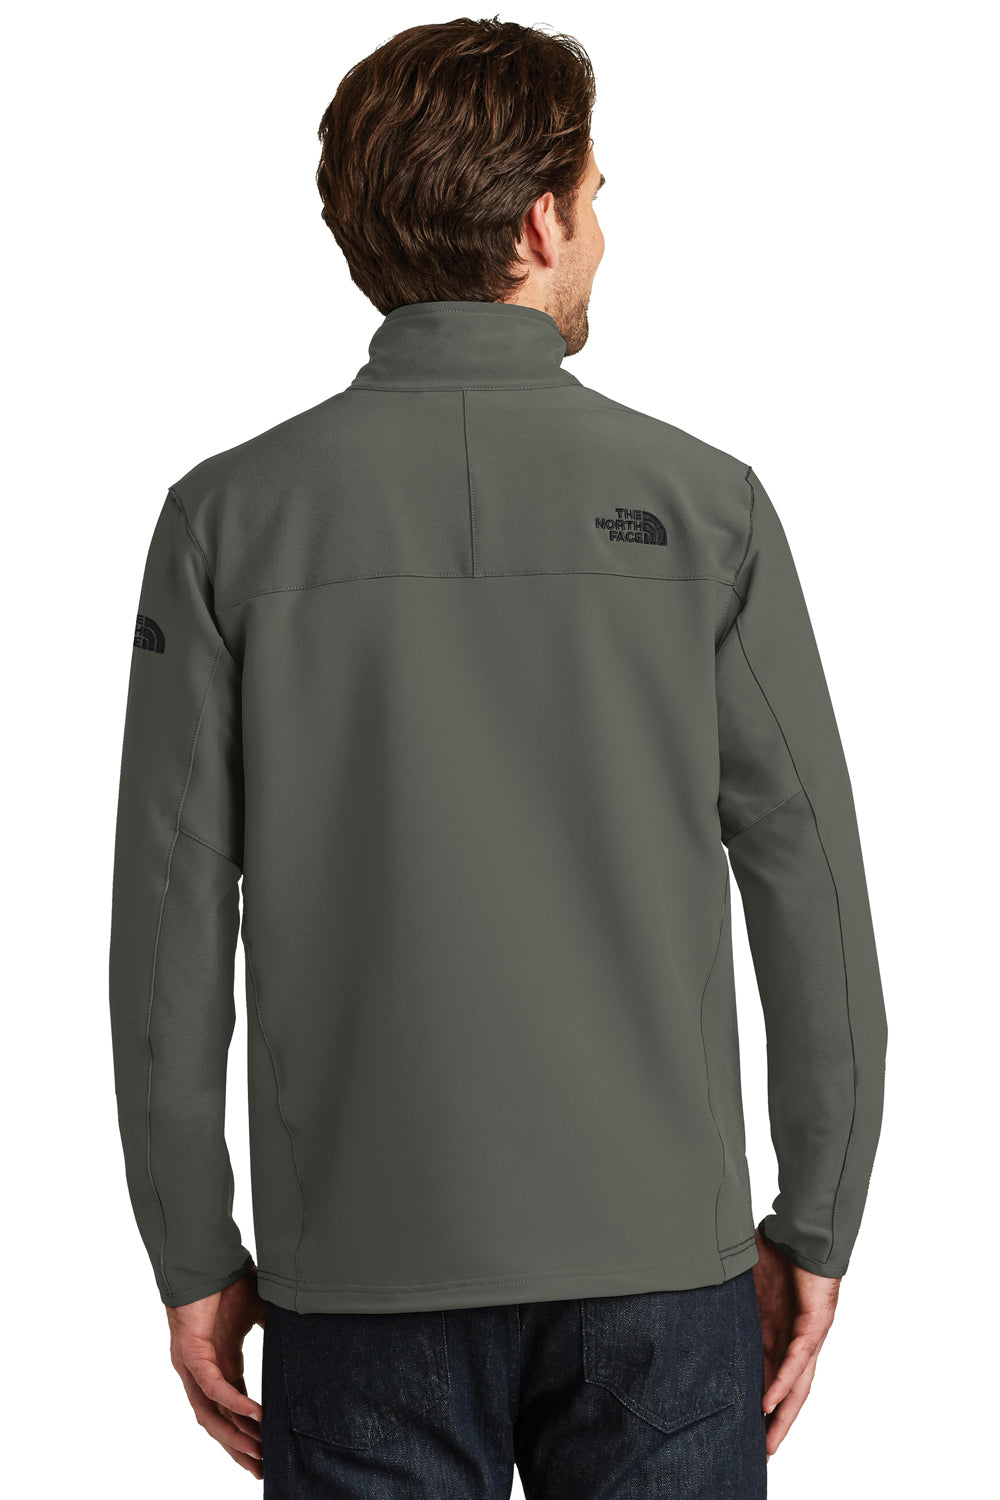 The North Face NF0A3LGV Mens Tech Wind & Water Resistant Full Zip Jacket Asphalt Grey Back